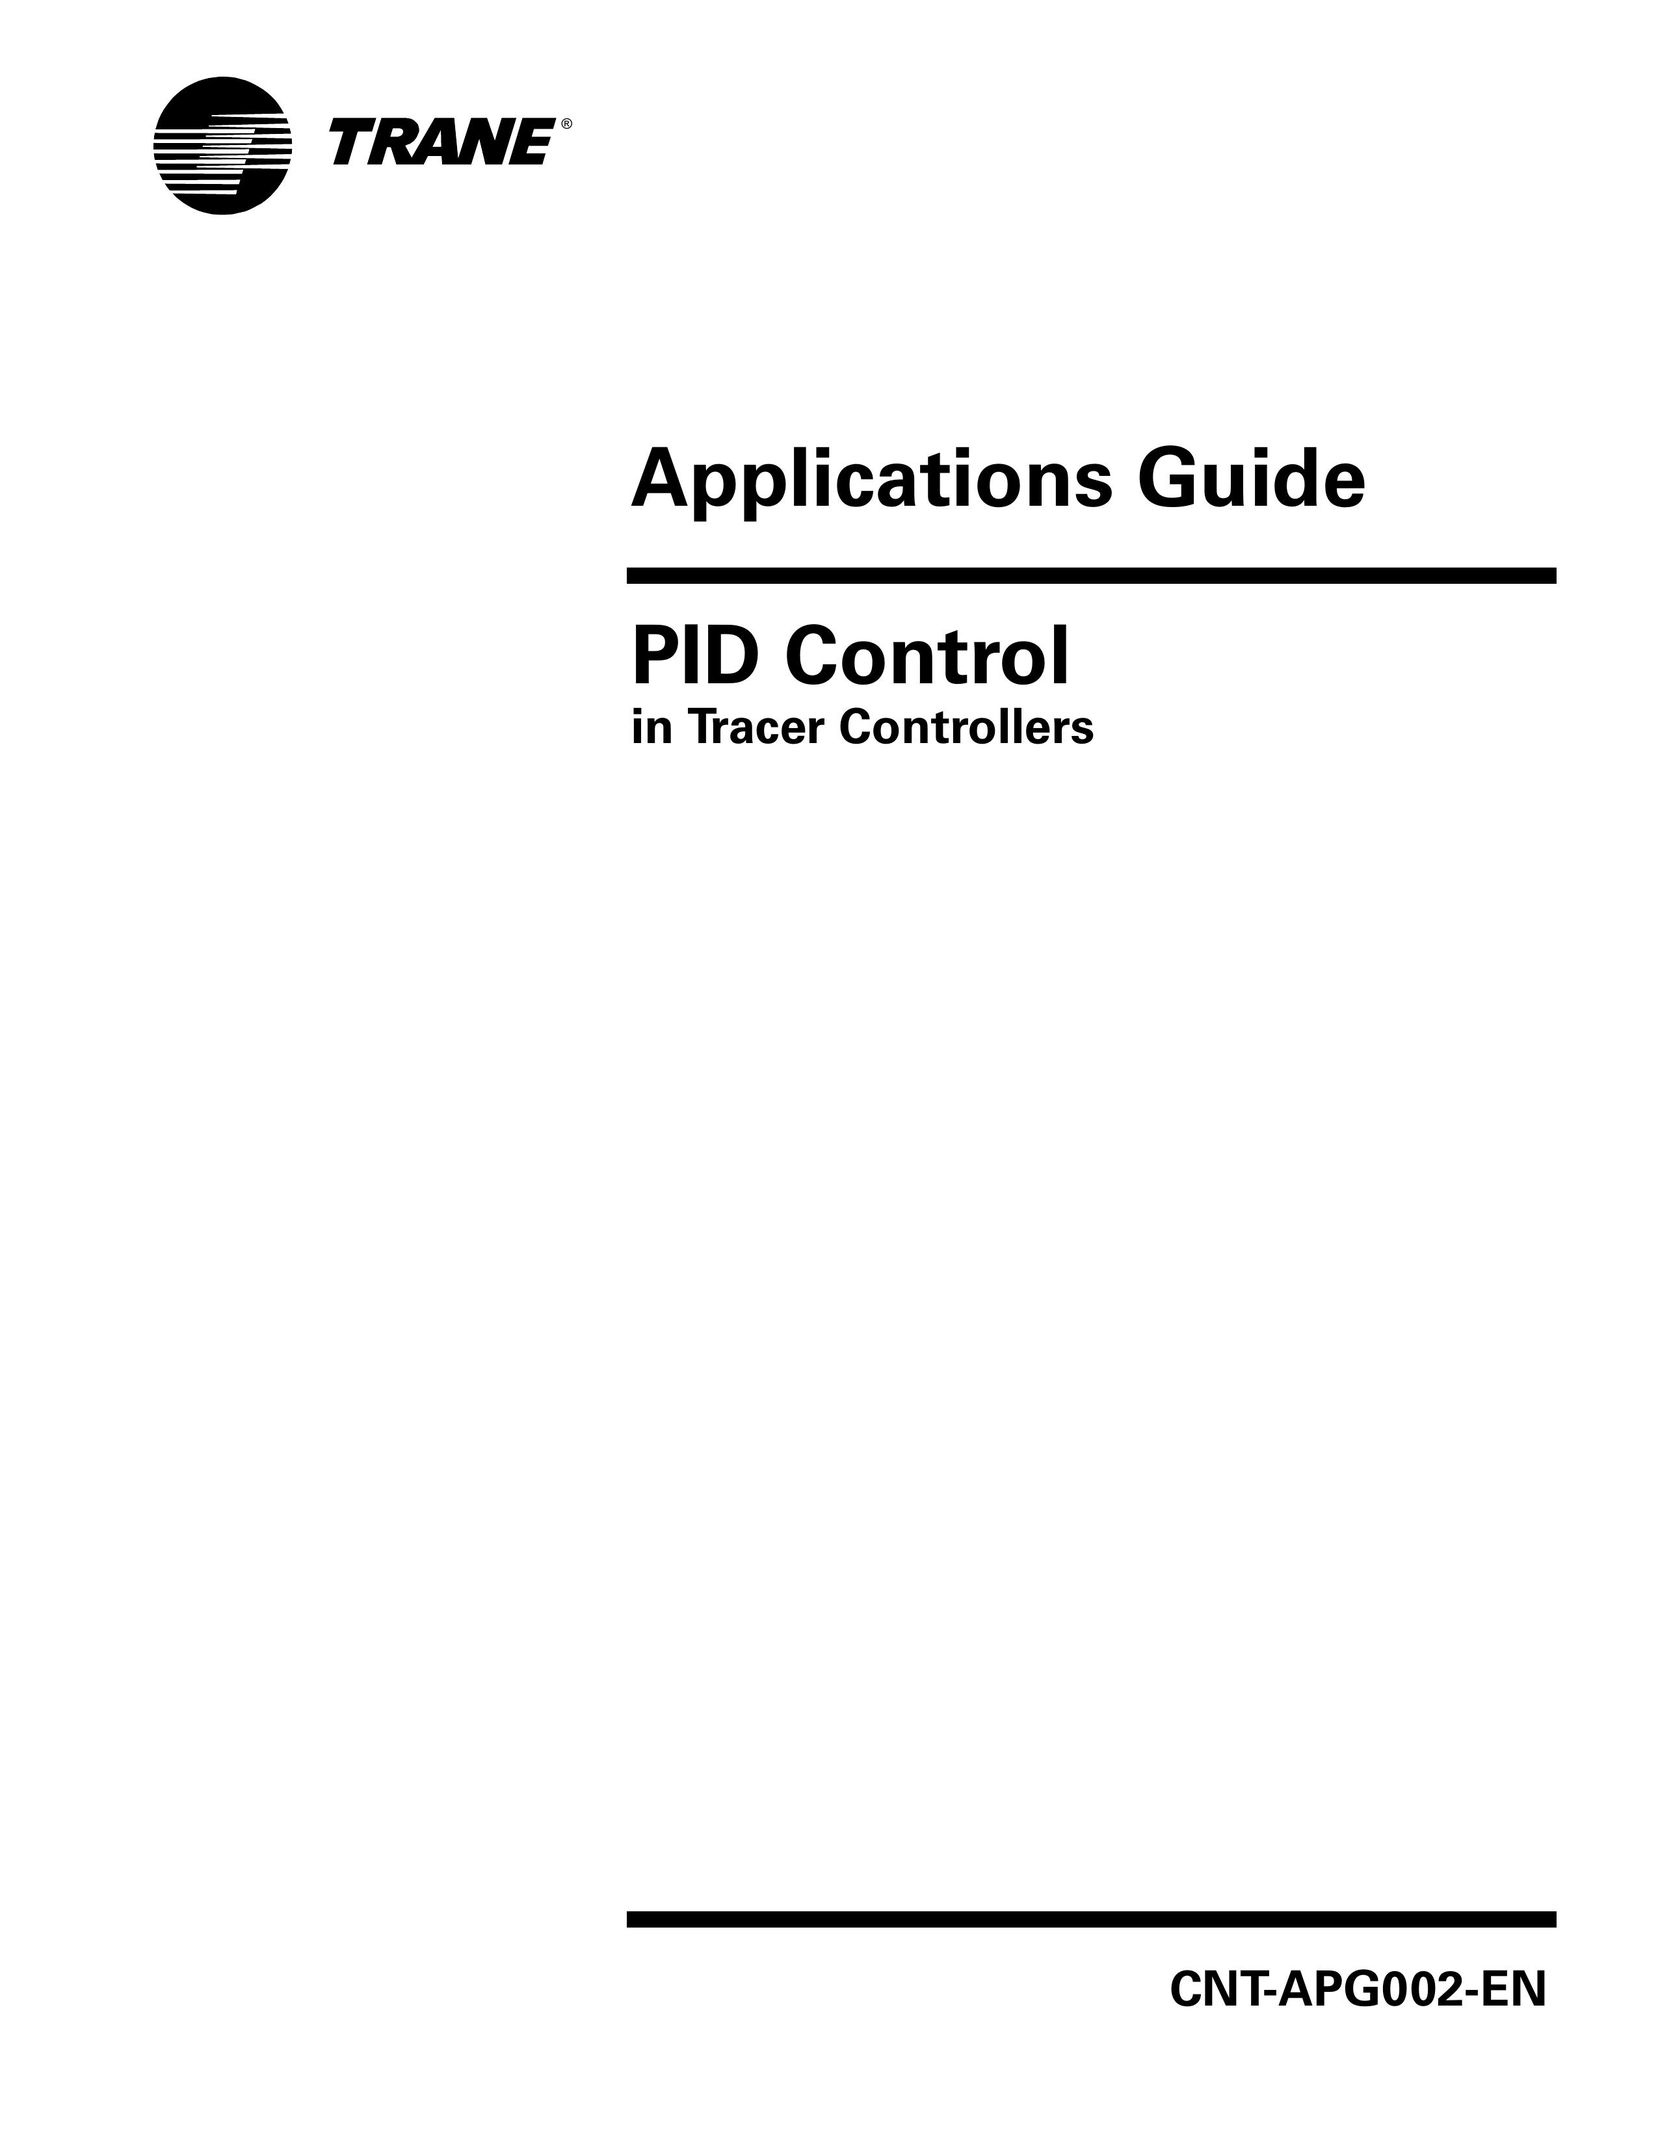 Trane PID Control Video Game Controller User Manual